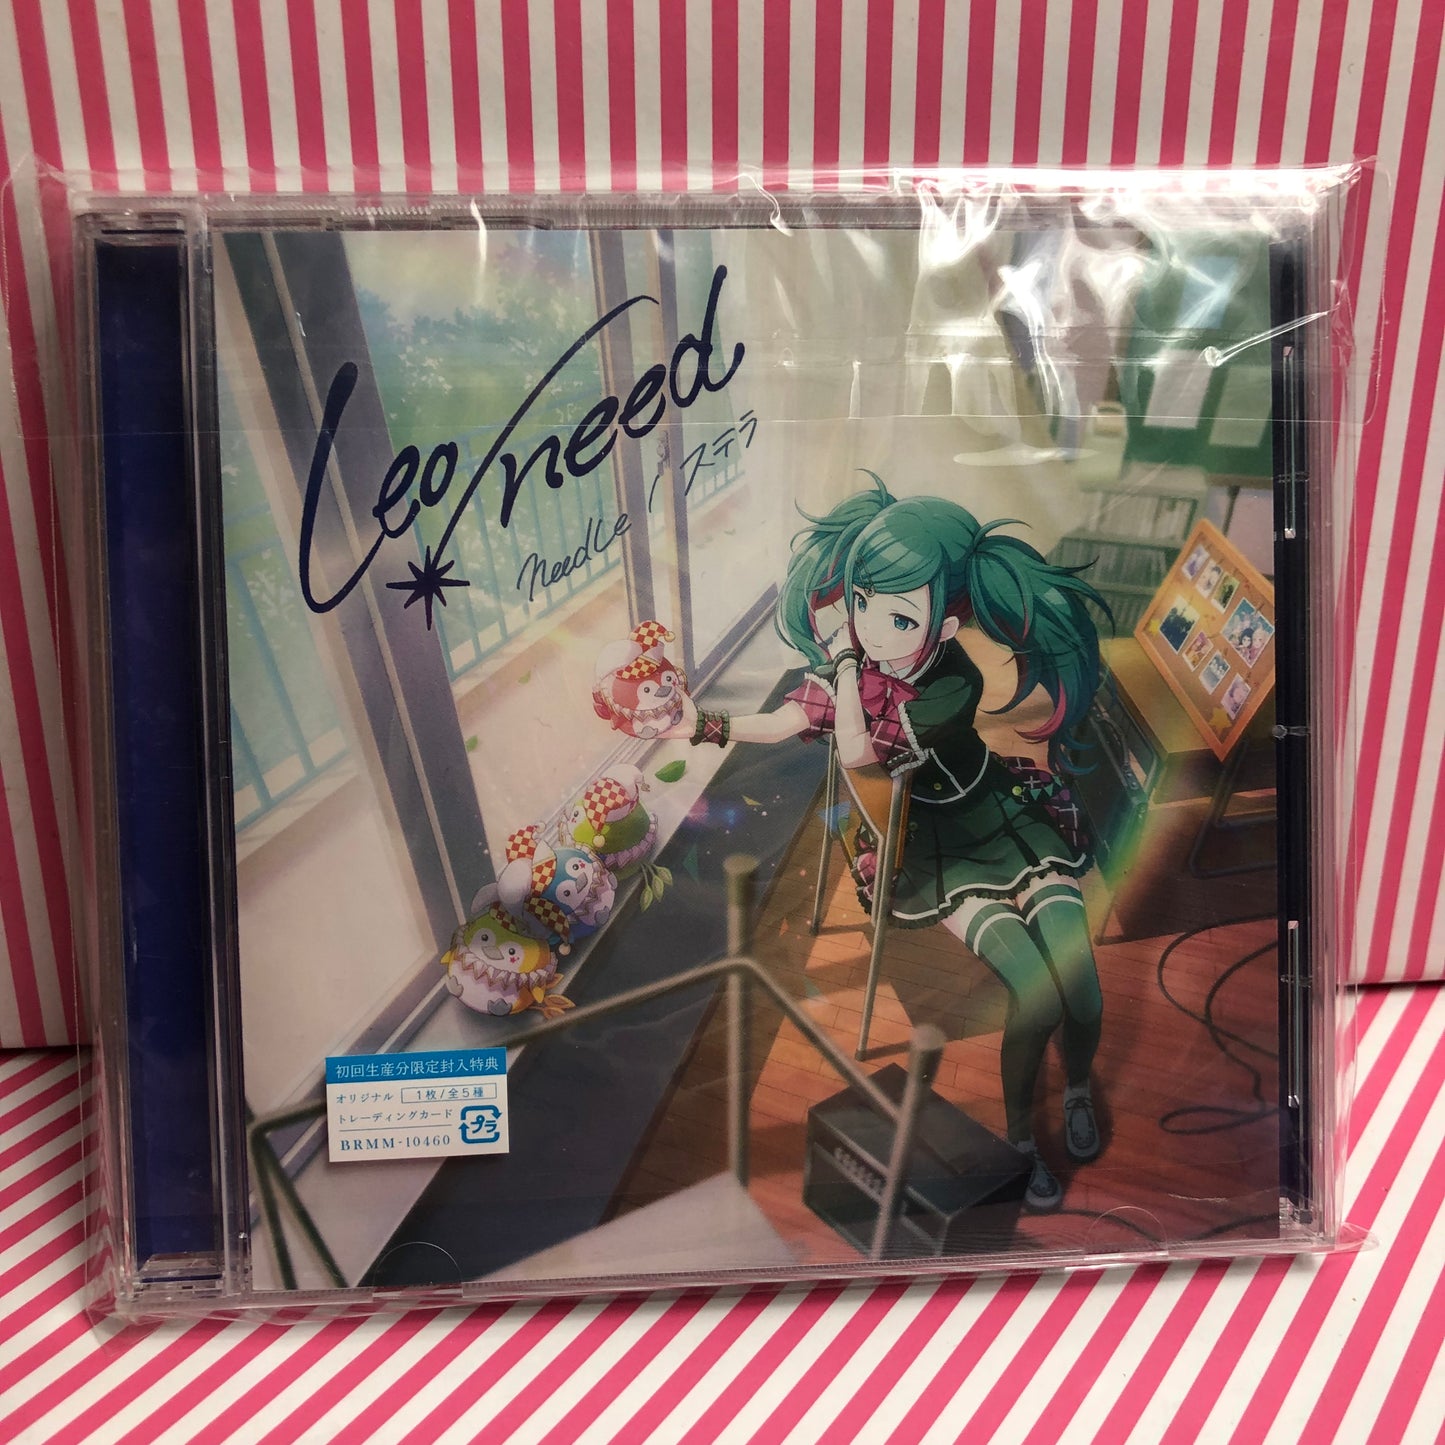 Project Sekai Colorful Stage! ft. Hatsune Miku - LeoNeed NeedLe 1st Single CD